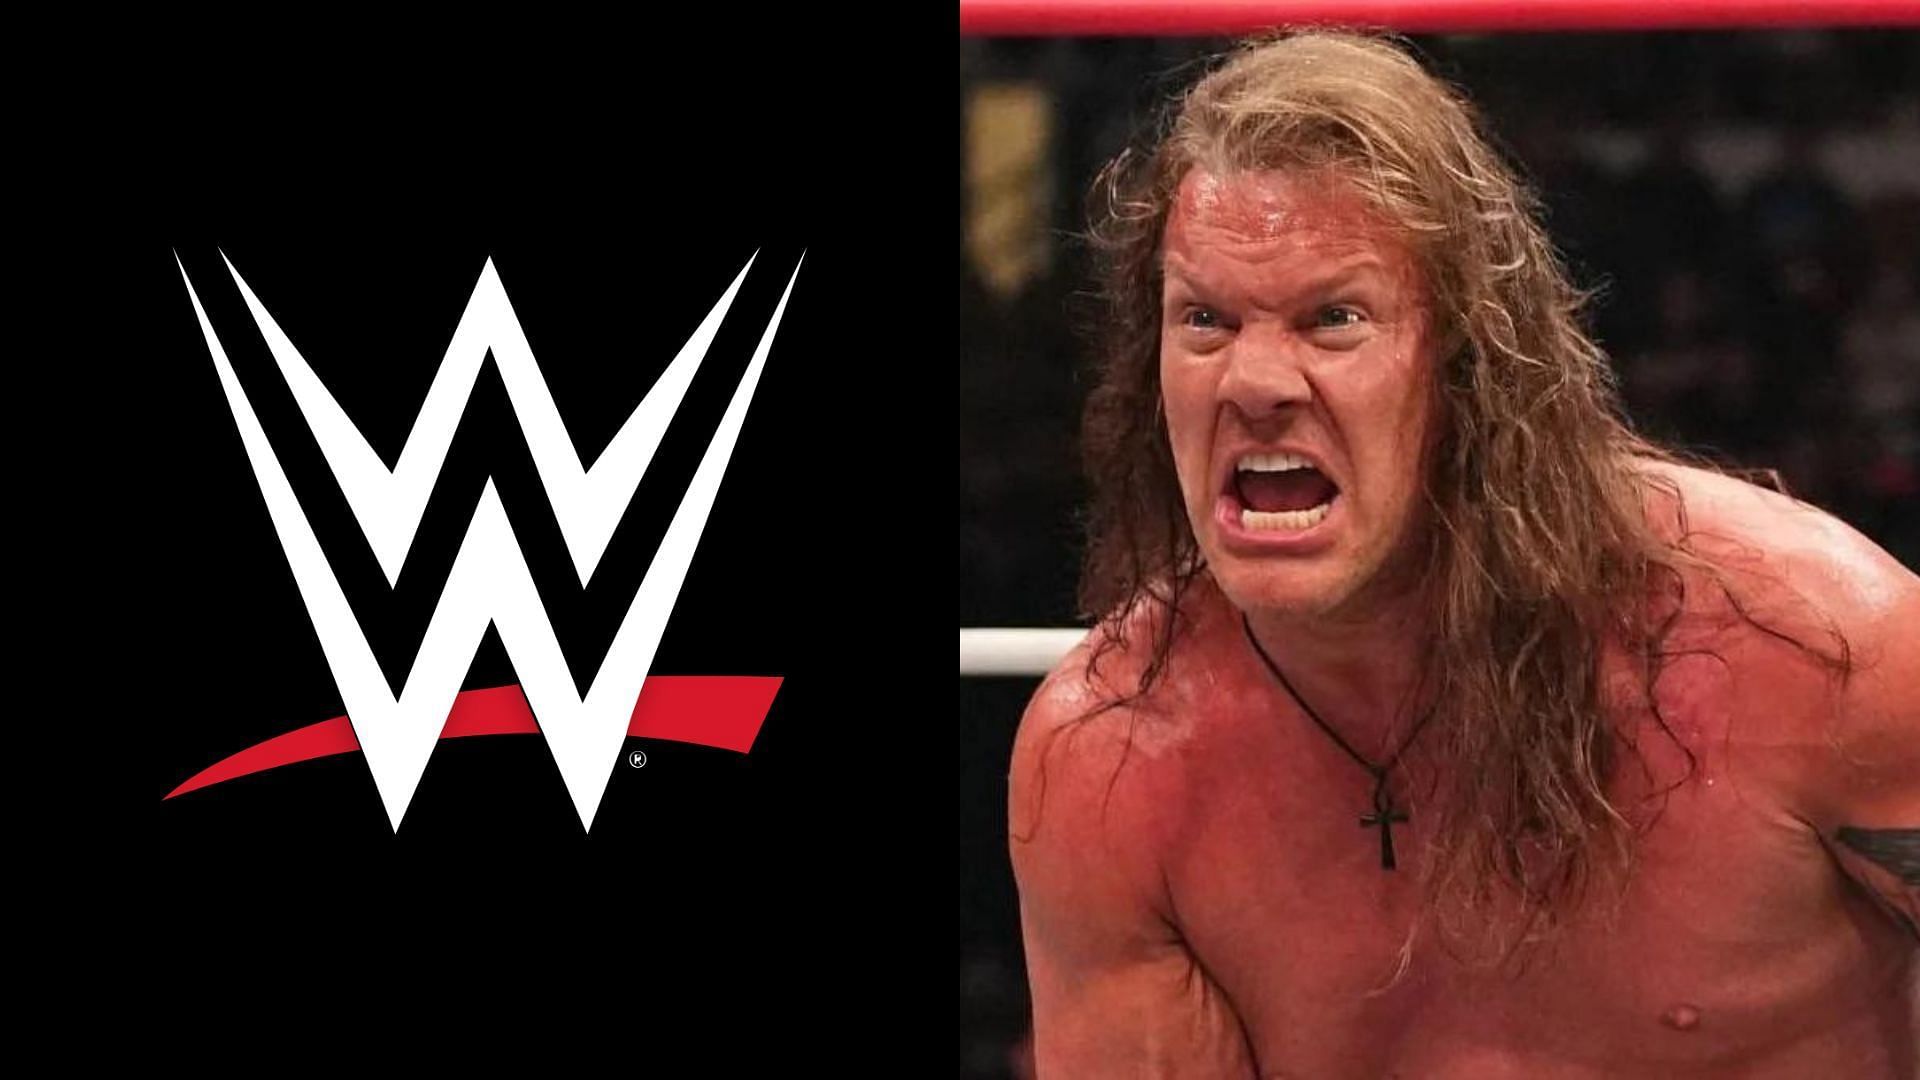 Chris Jericho is the inaugural AEW World Champion